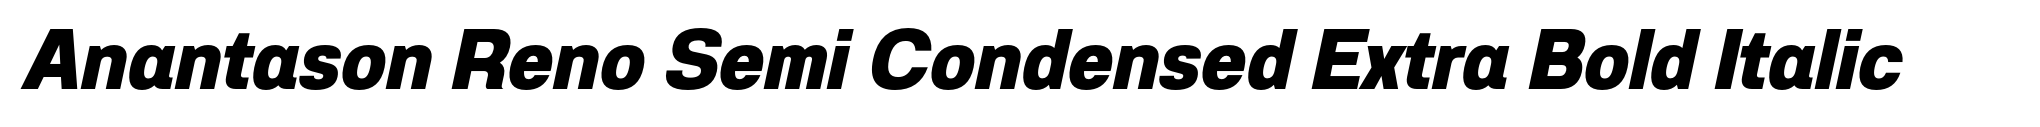 Anantason Reno Semi Condensed Extra Bold Italic image